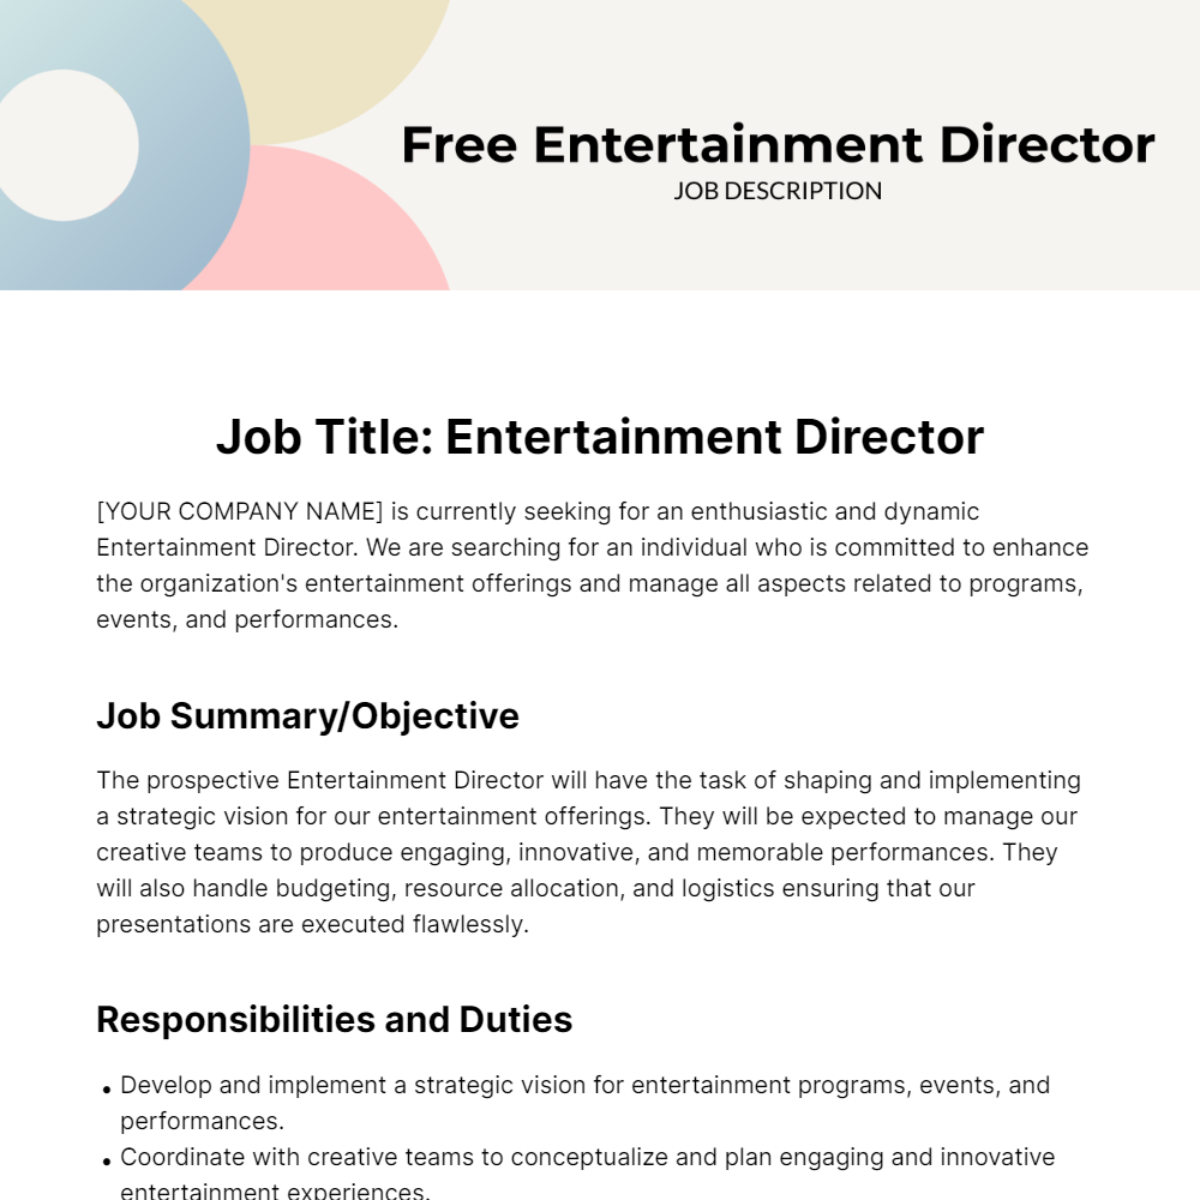 Free Entertainment Director Job Description Template